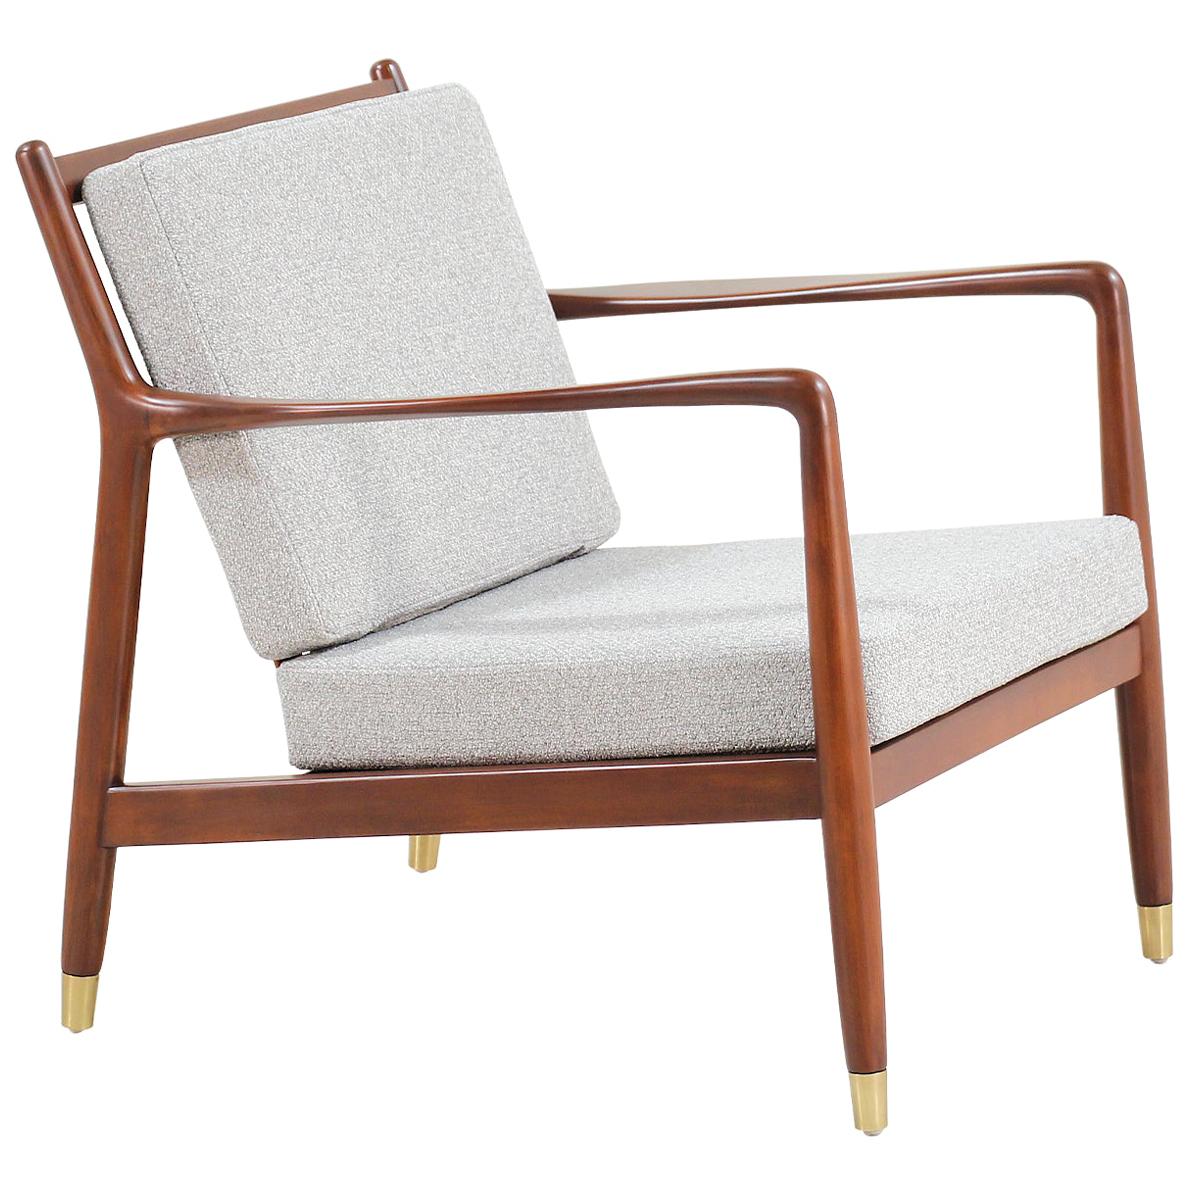 Folke Ohlsson Lounge Chair for DUX